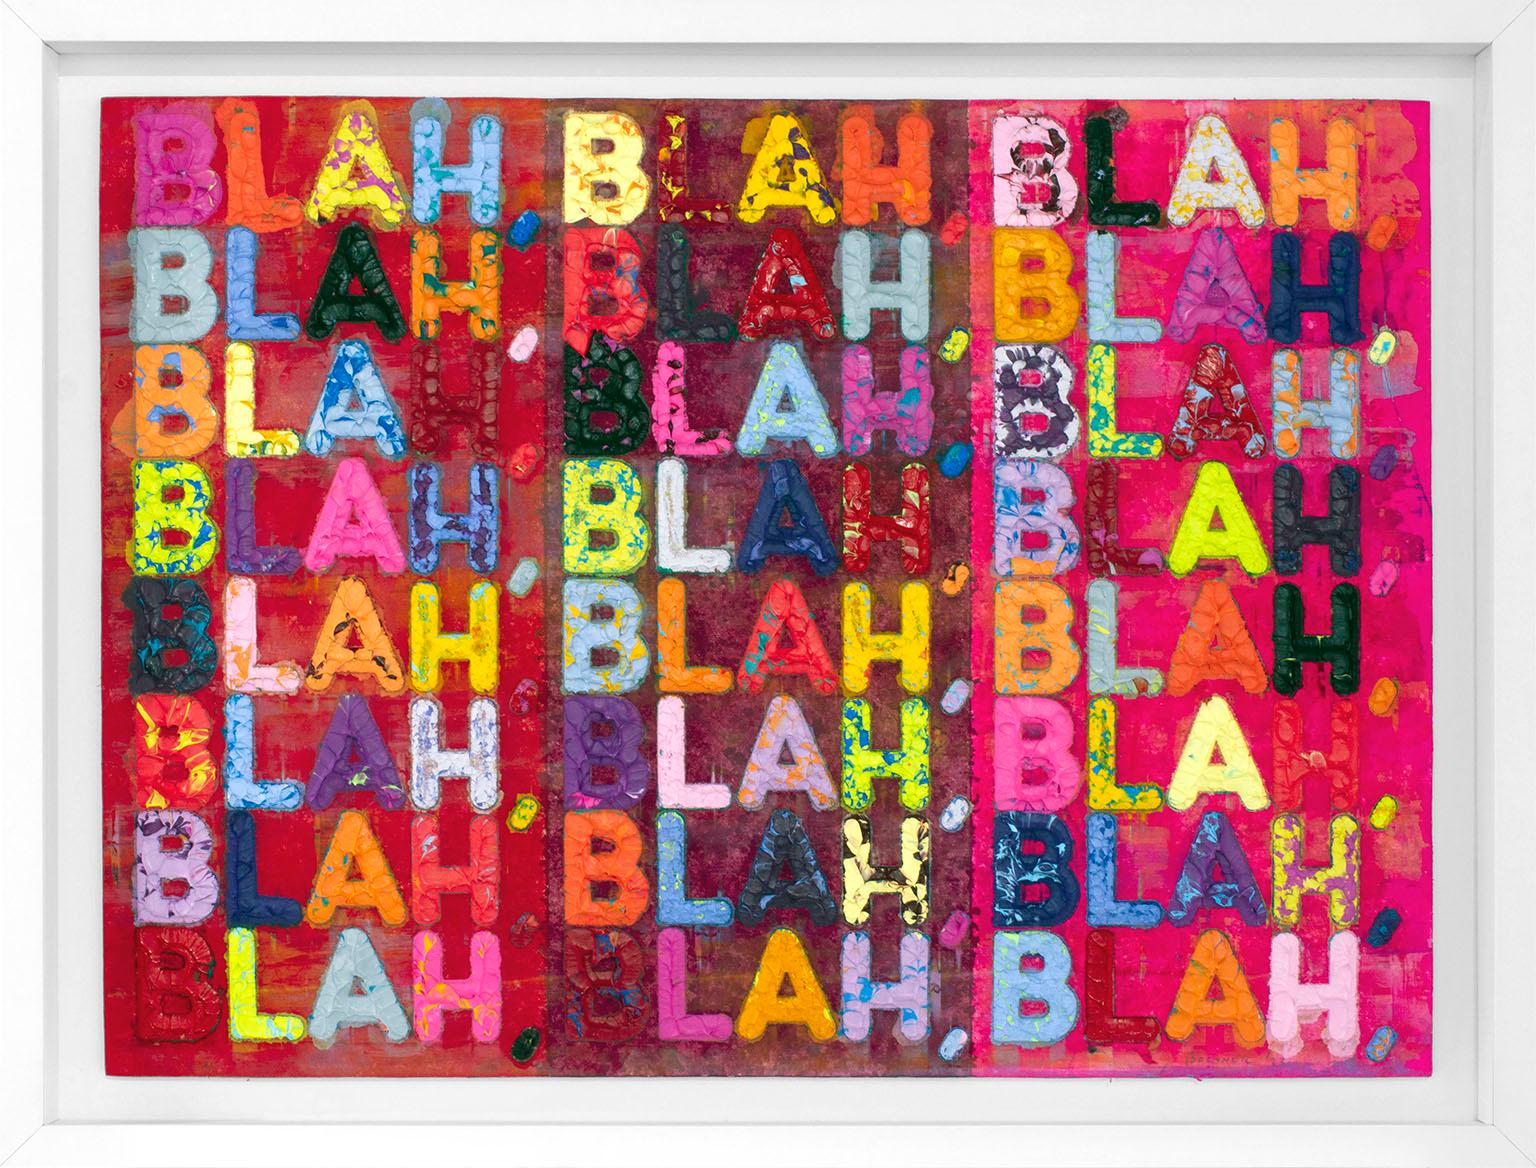 Mel Bochner "Blah, Blah, Blah" Öl-Monoprint mit Collage, Gravur, Prägung